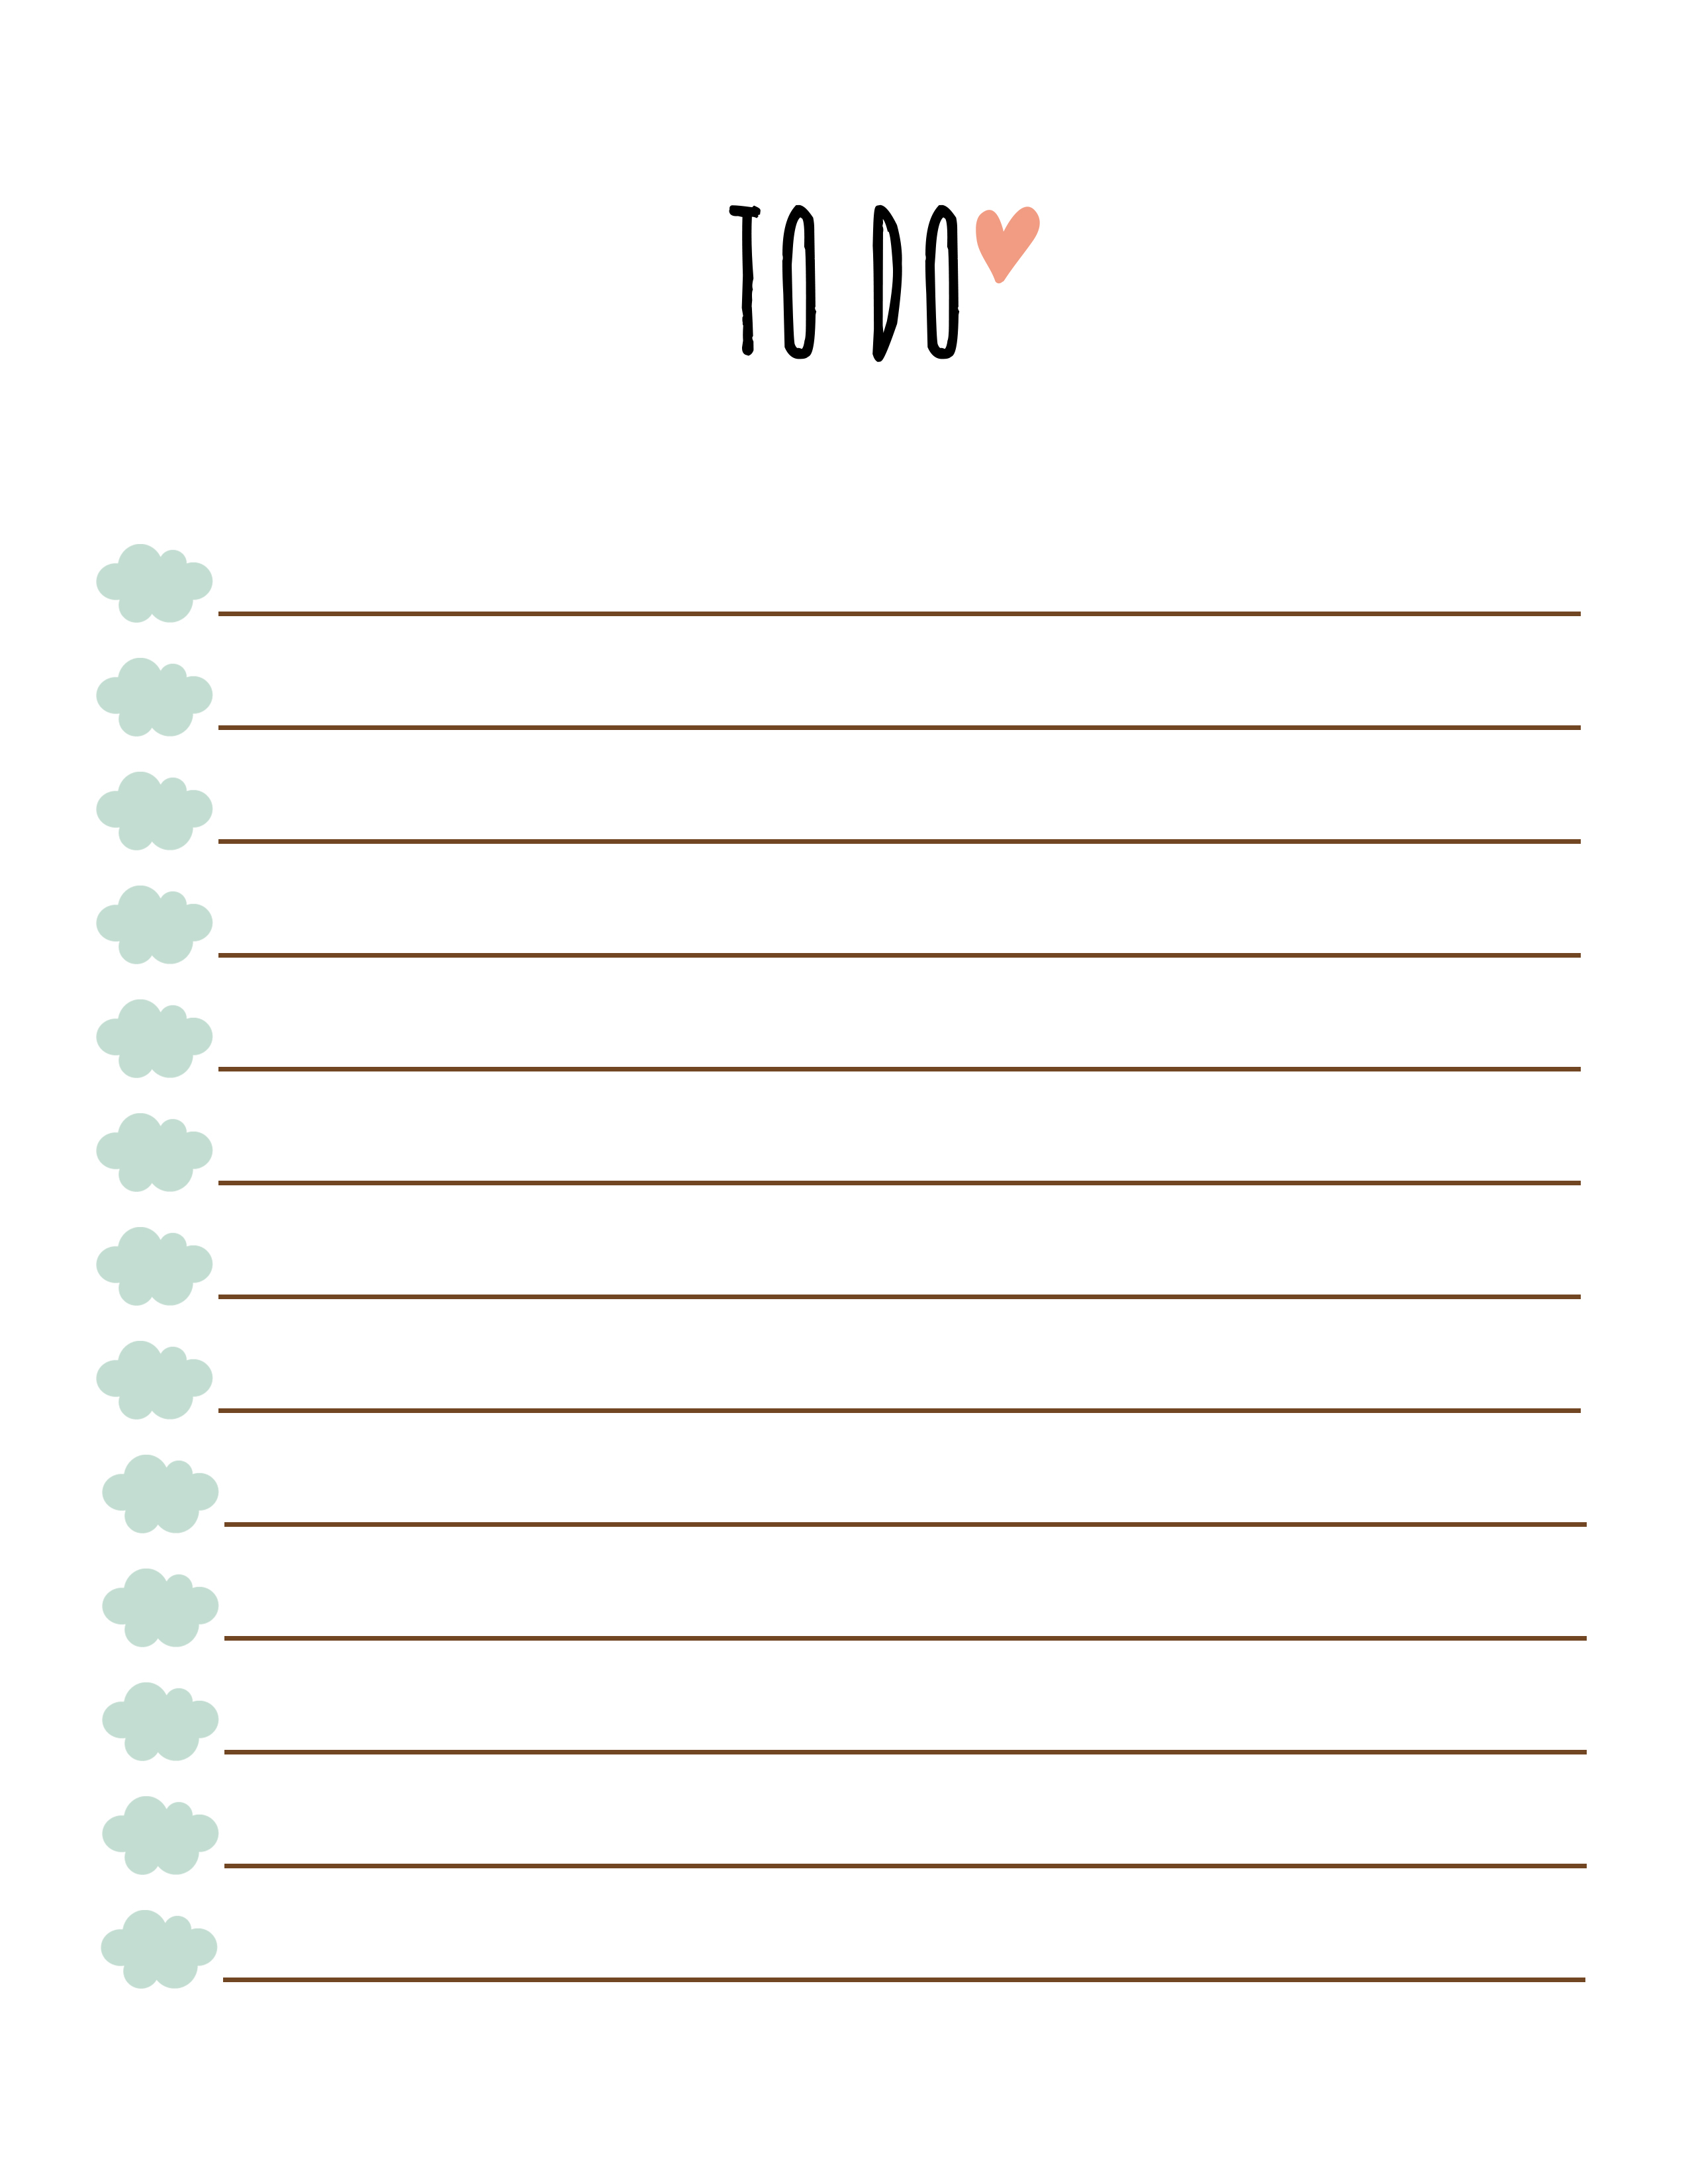 Free Printable To Do List Templates | Latest Calendar Inside Blank To Do List Template